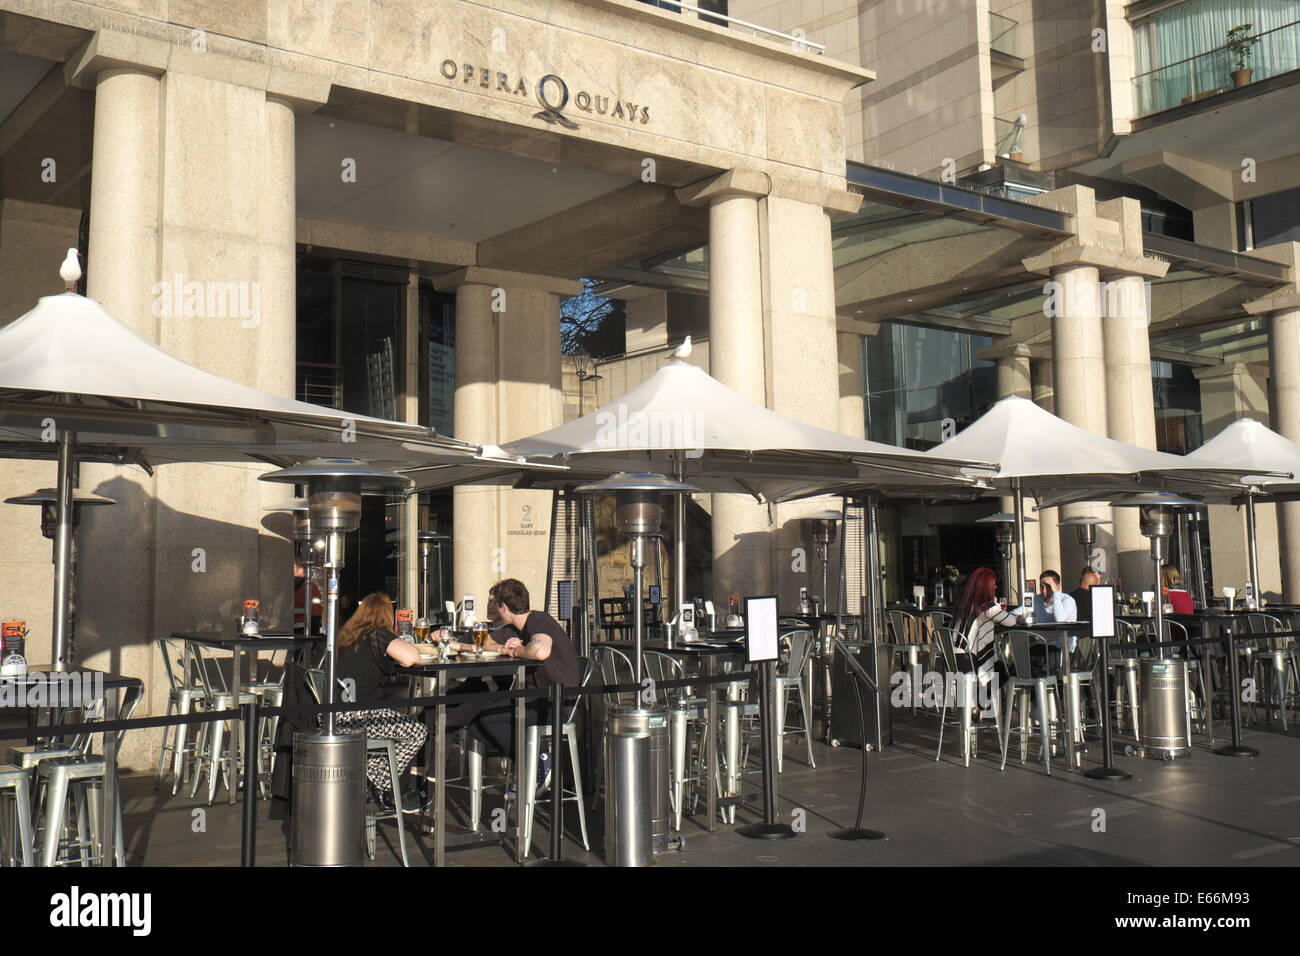 East circular quay in sydney city centre with opera quays restaurant cafe bar Stock Photo